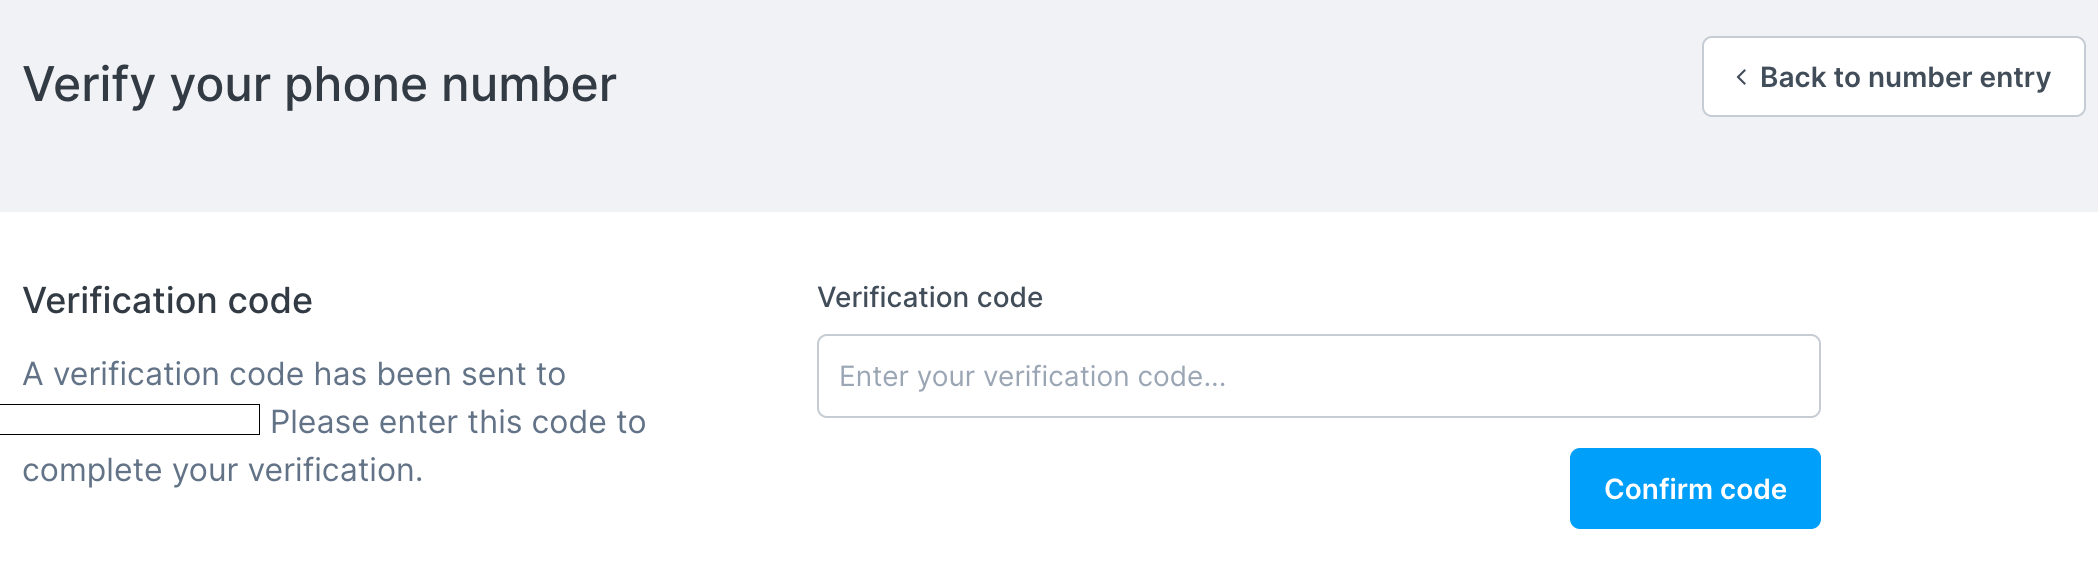 Phone verification code entry